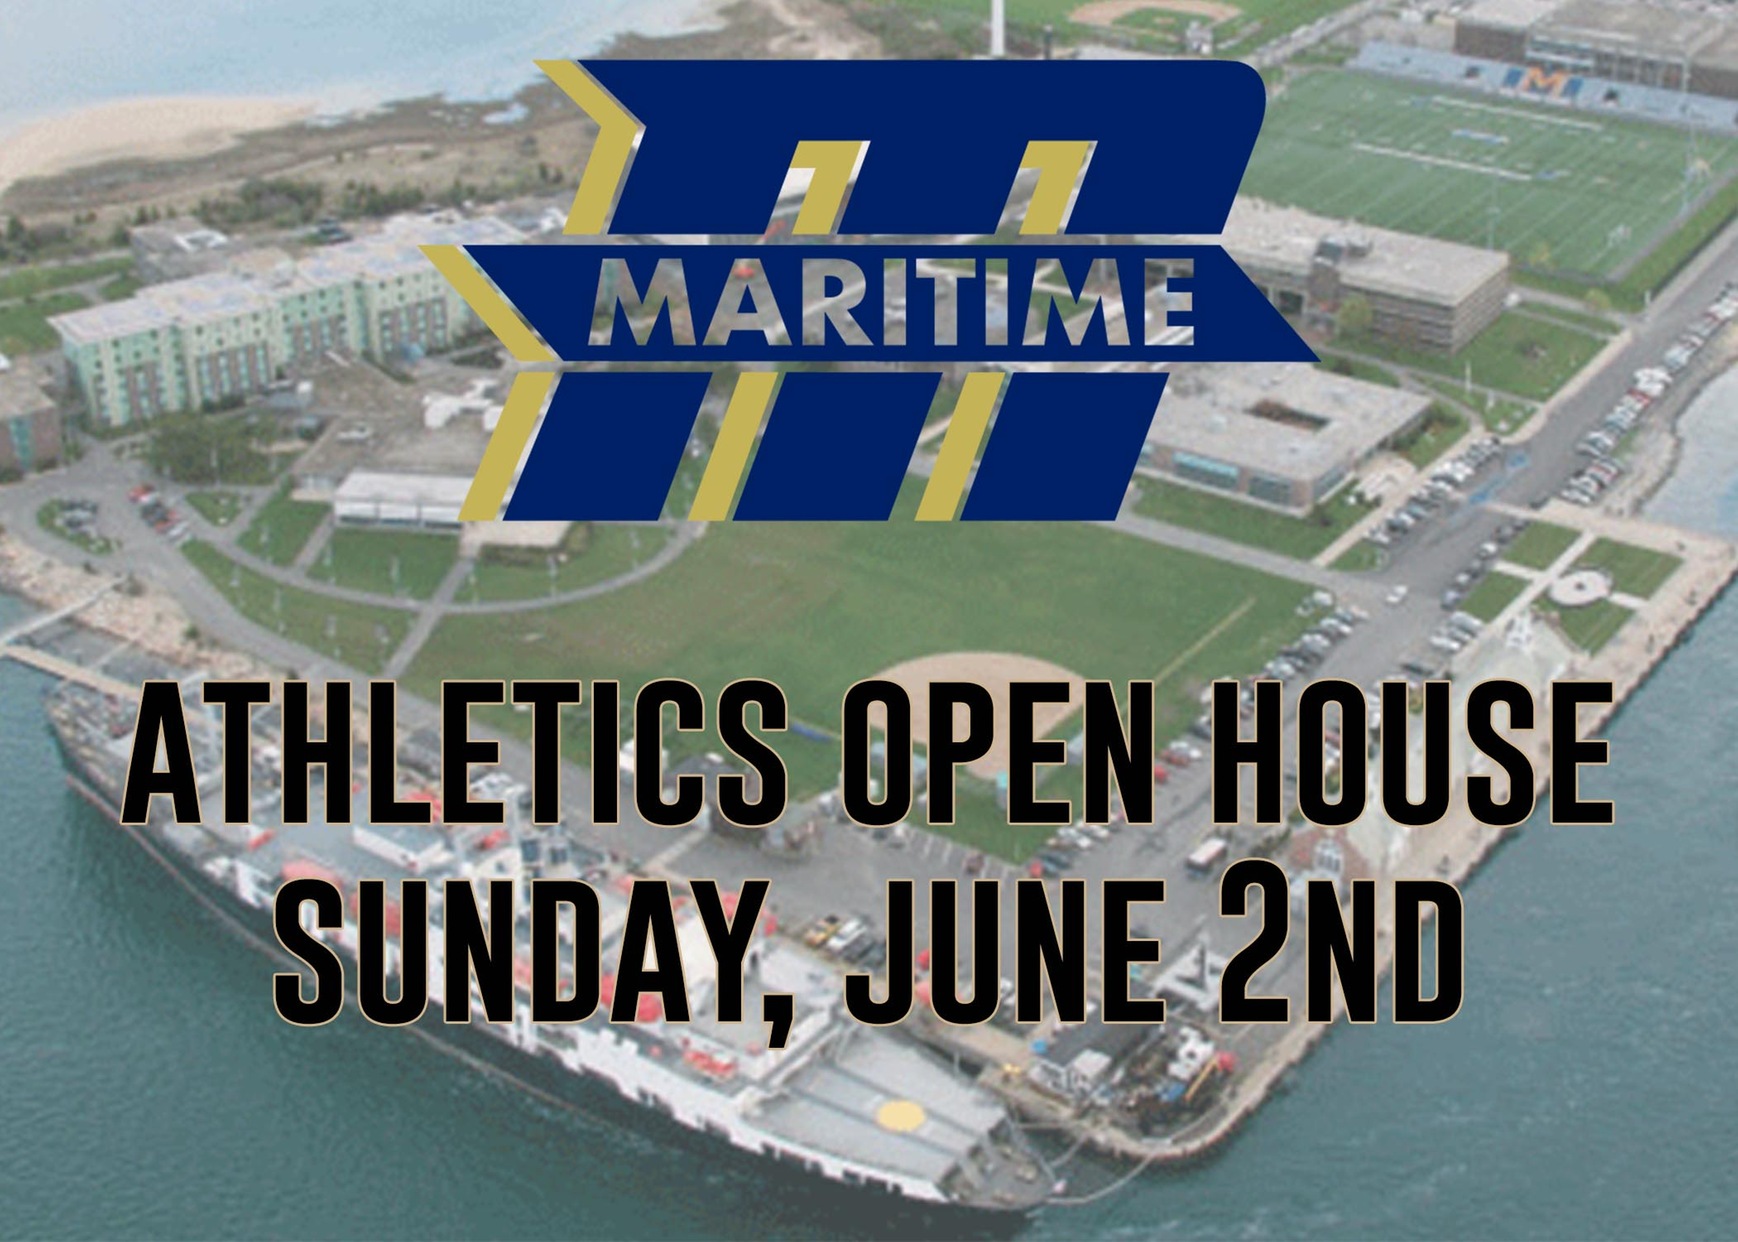 Massachusetts Maritime Athletic Department Holding Athletic Open House on Sunday, June 2nd